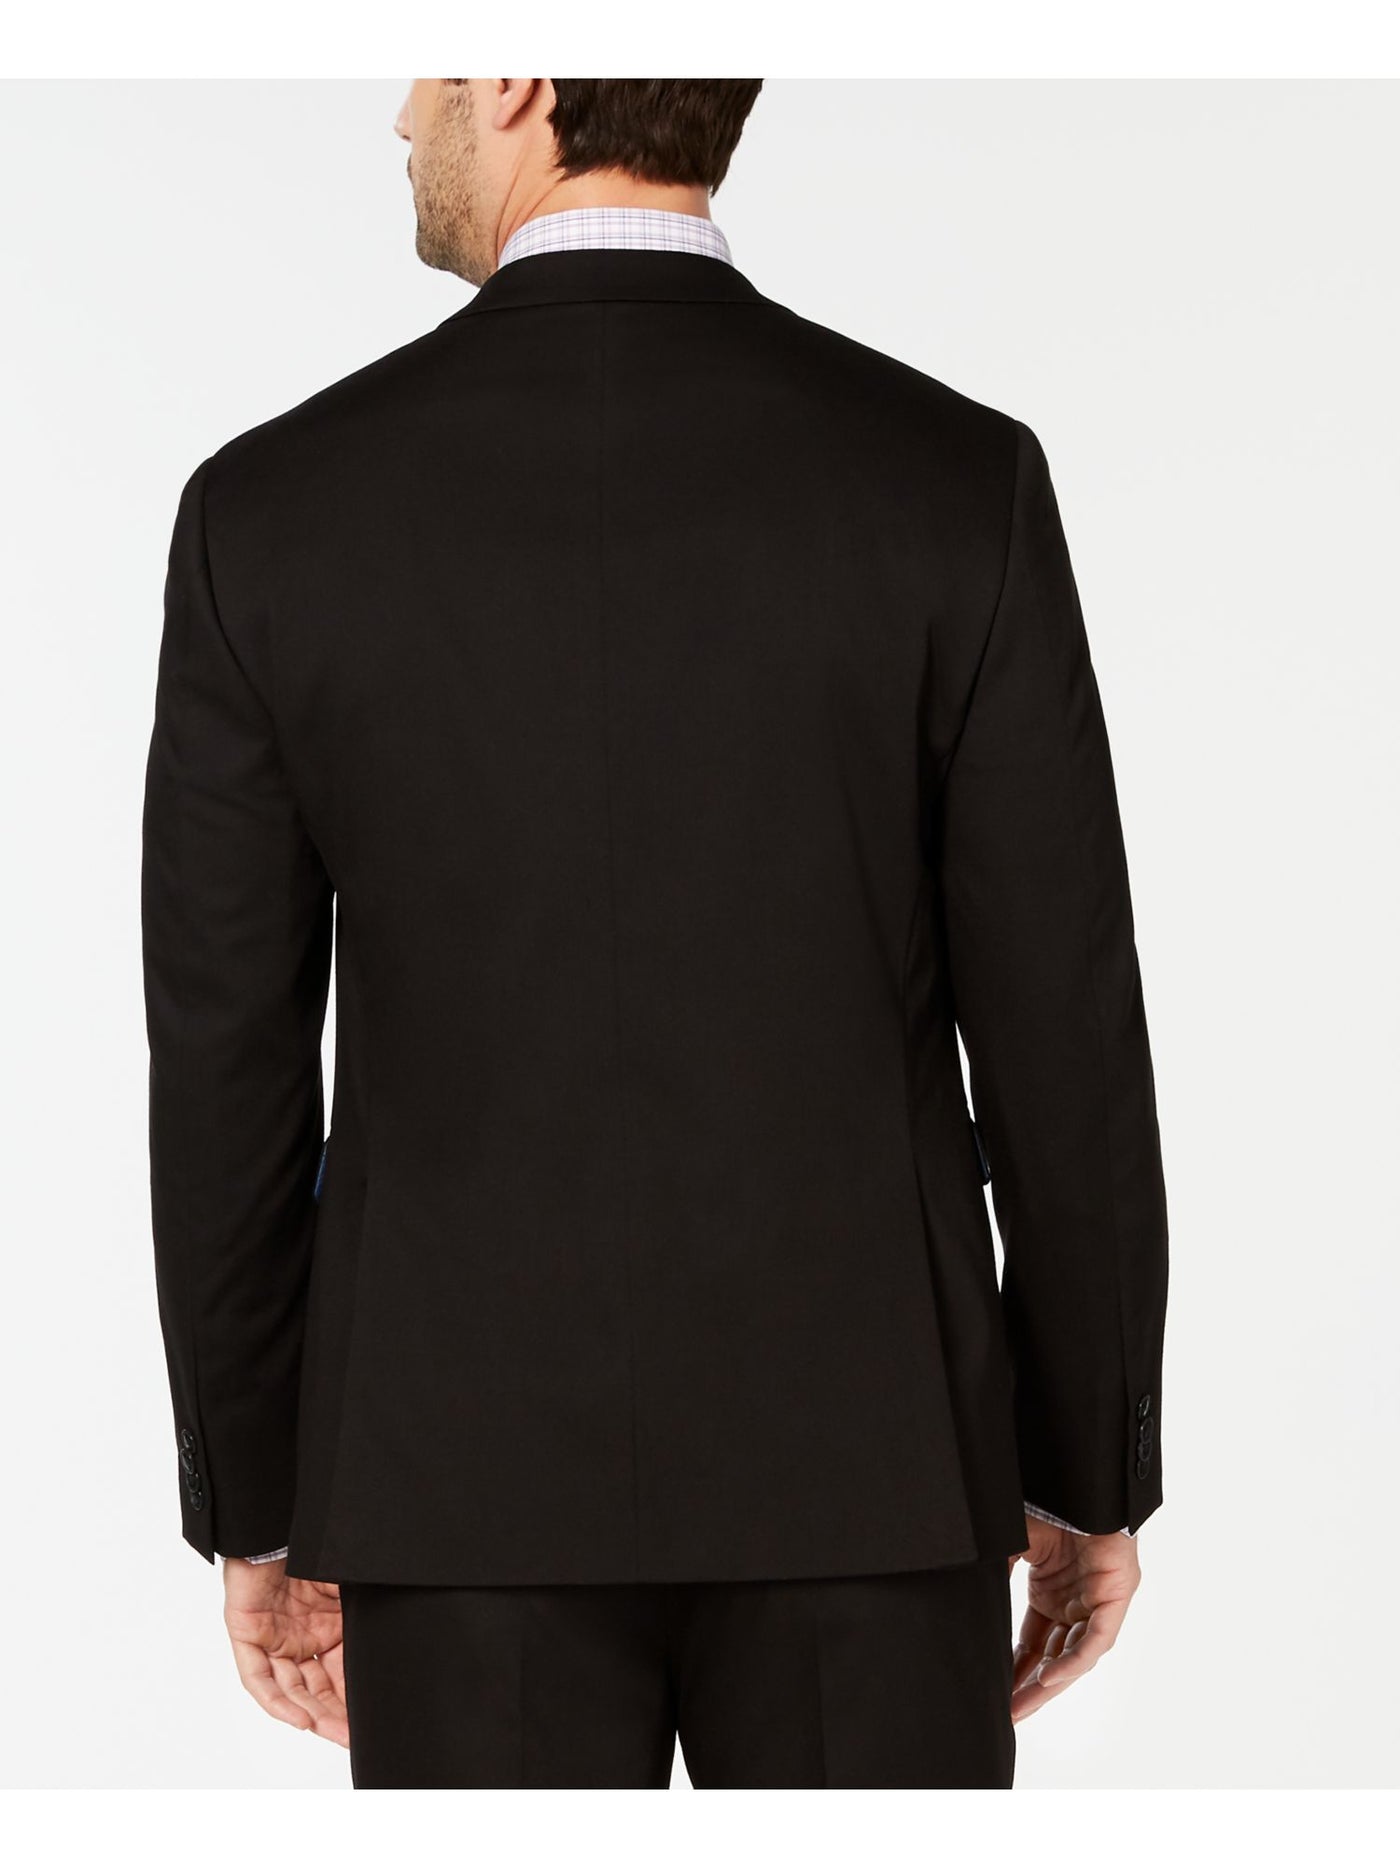 VINCE CAMUTO Mens Black Single Breasted, Stretch, Slim Fit Wrinkle Resistant Suit Separate Blazer Jacket 36R